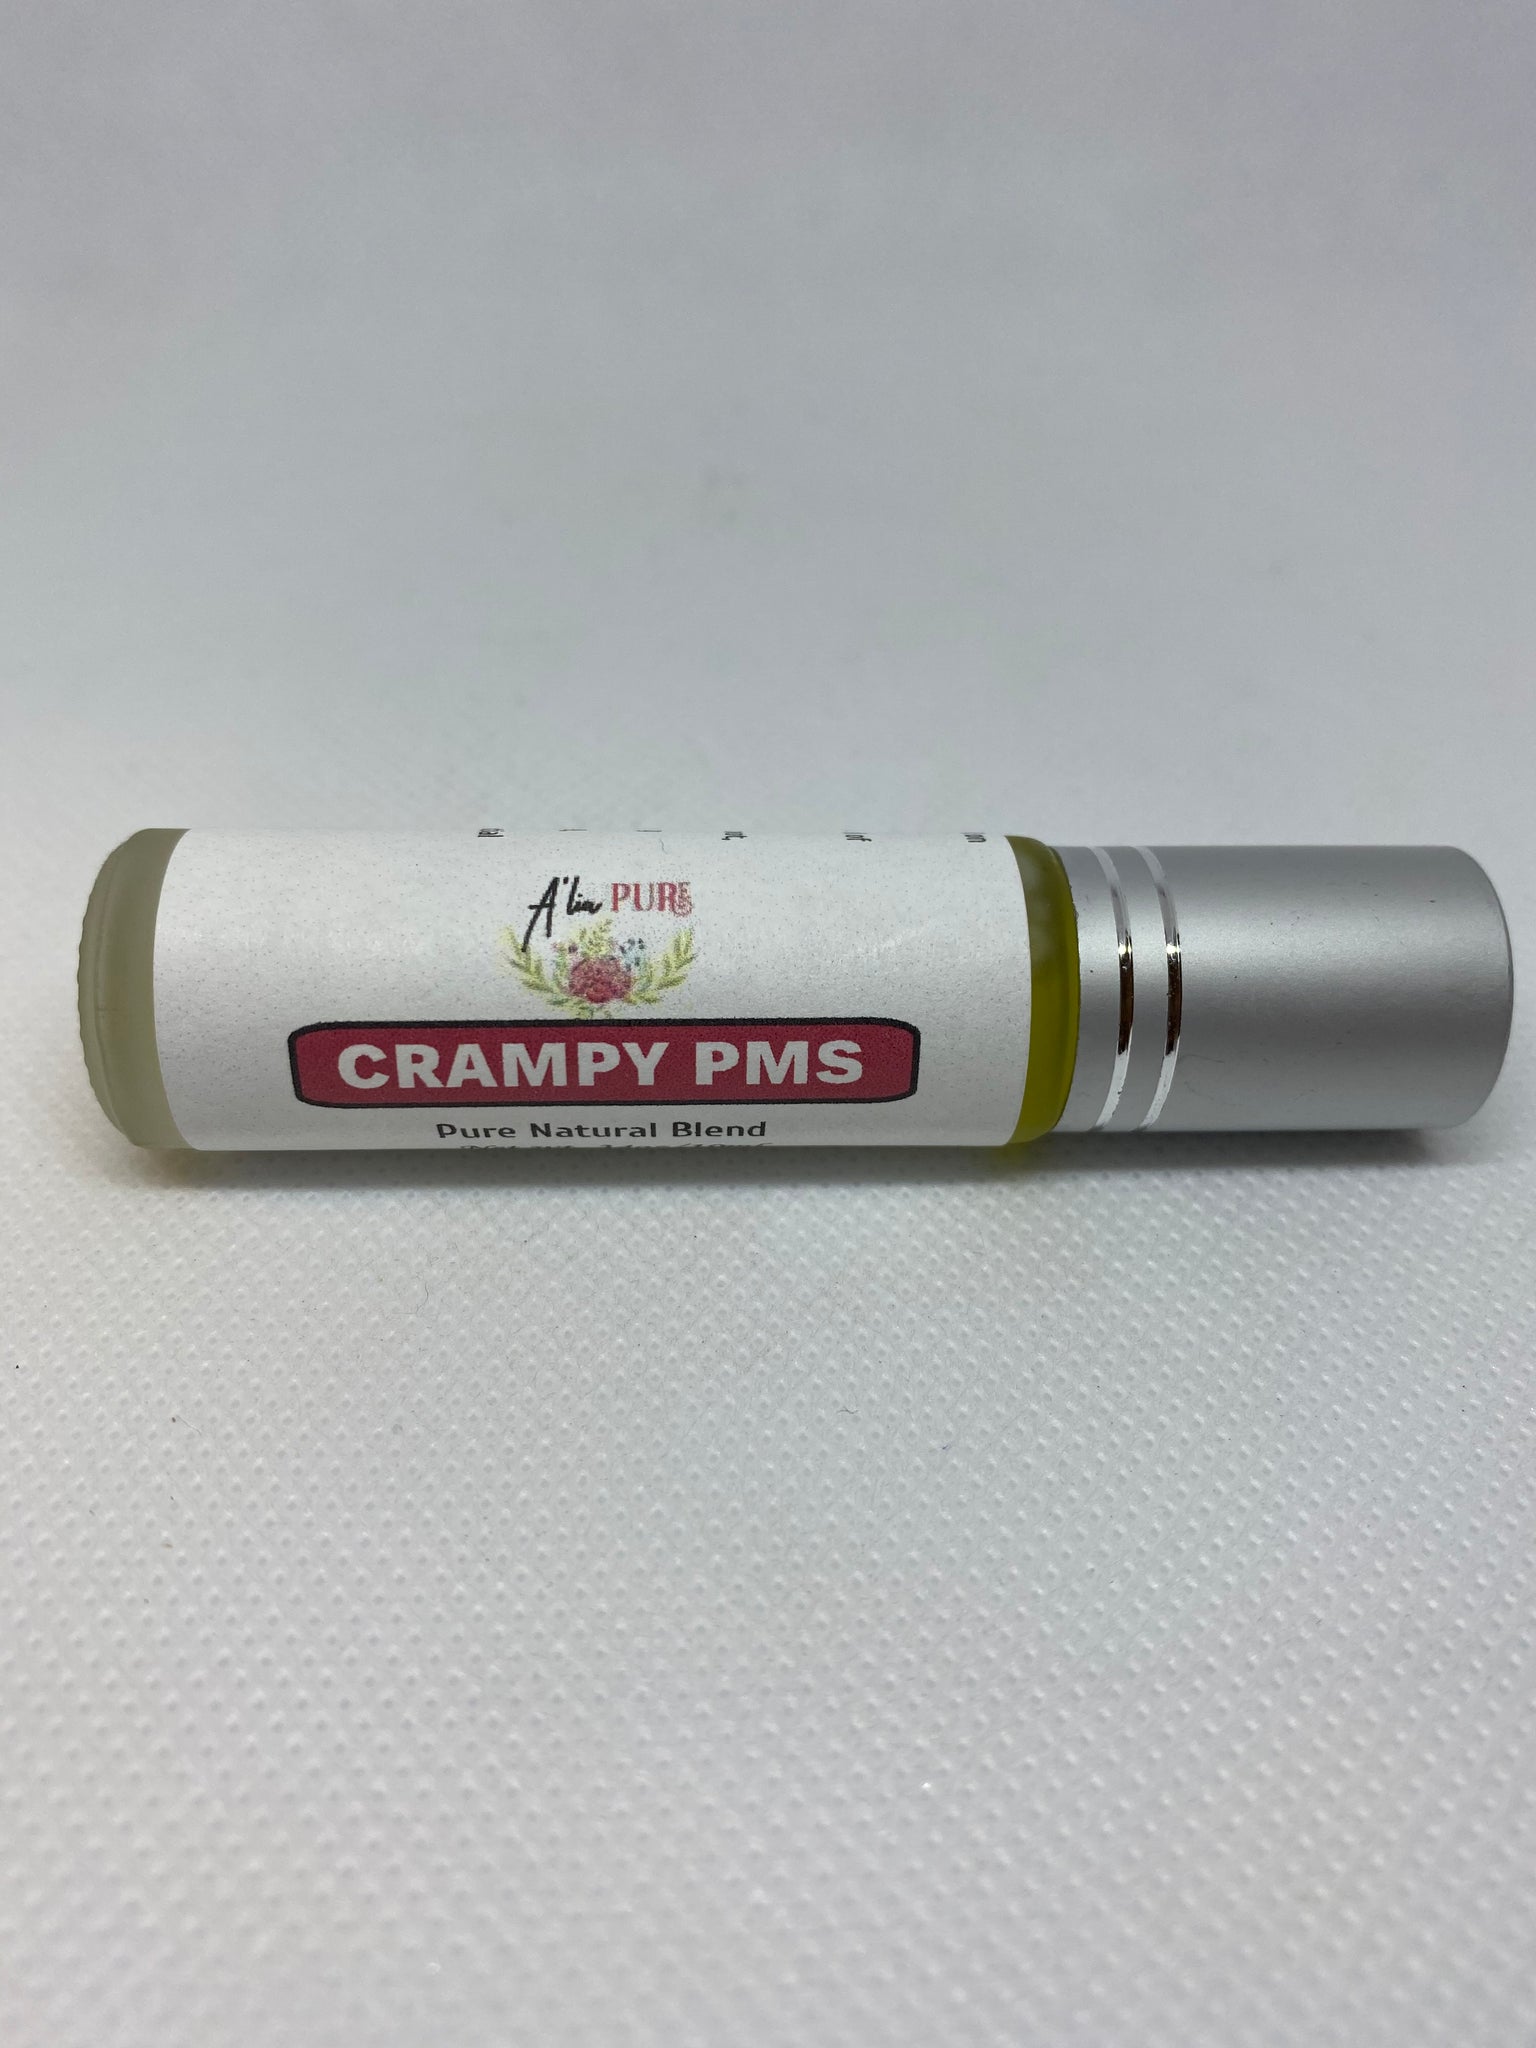 Crampy/ PMS